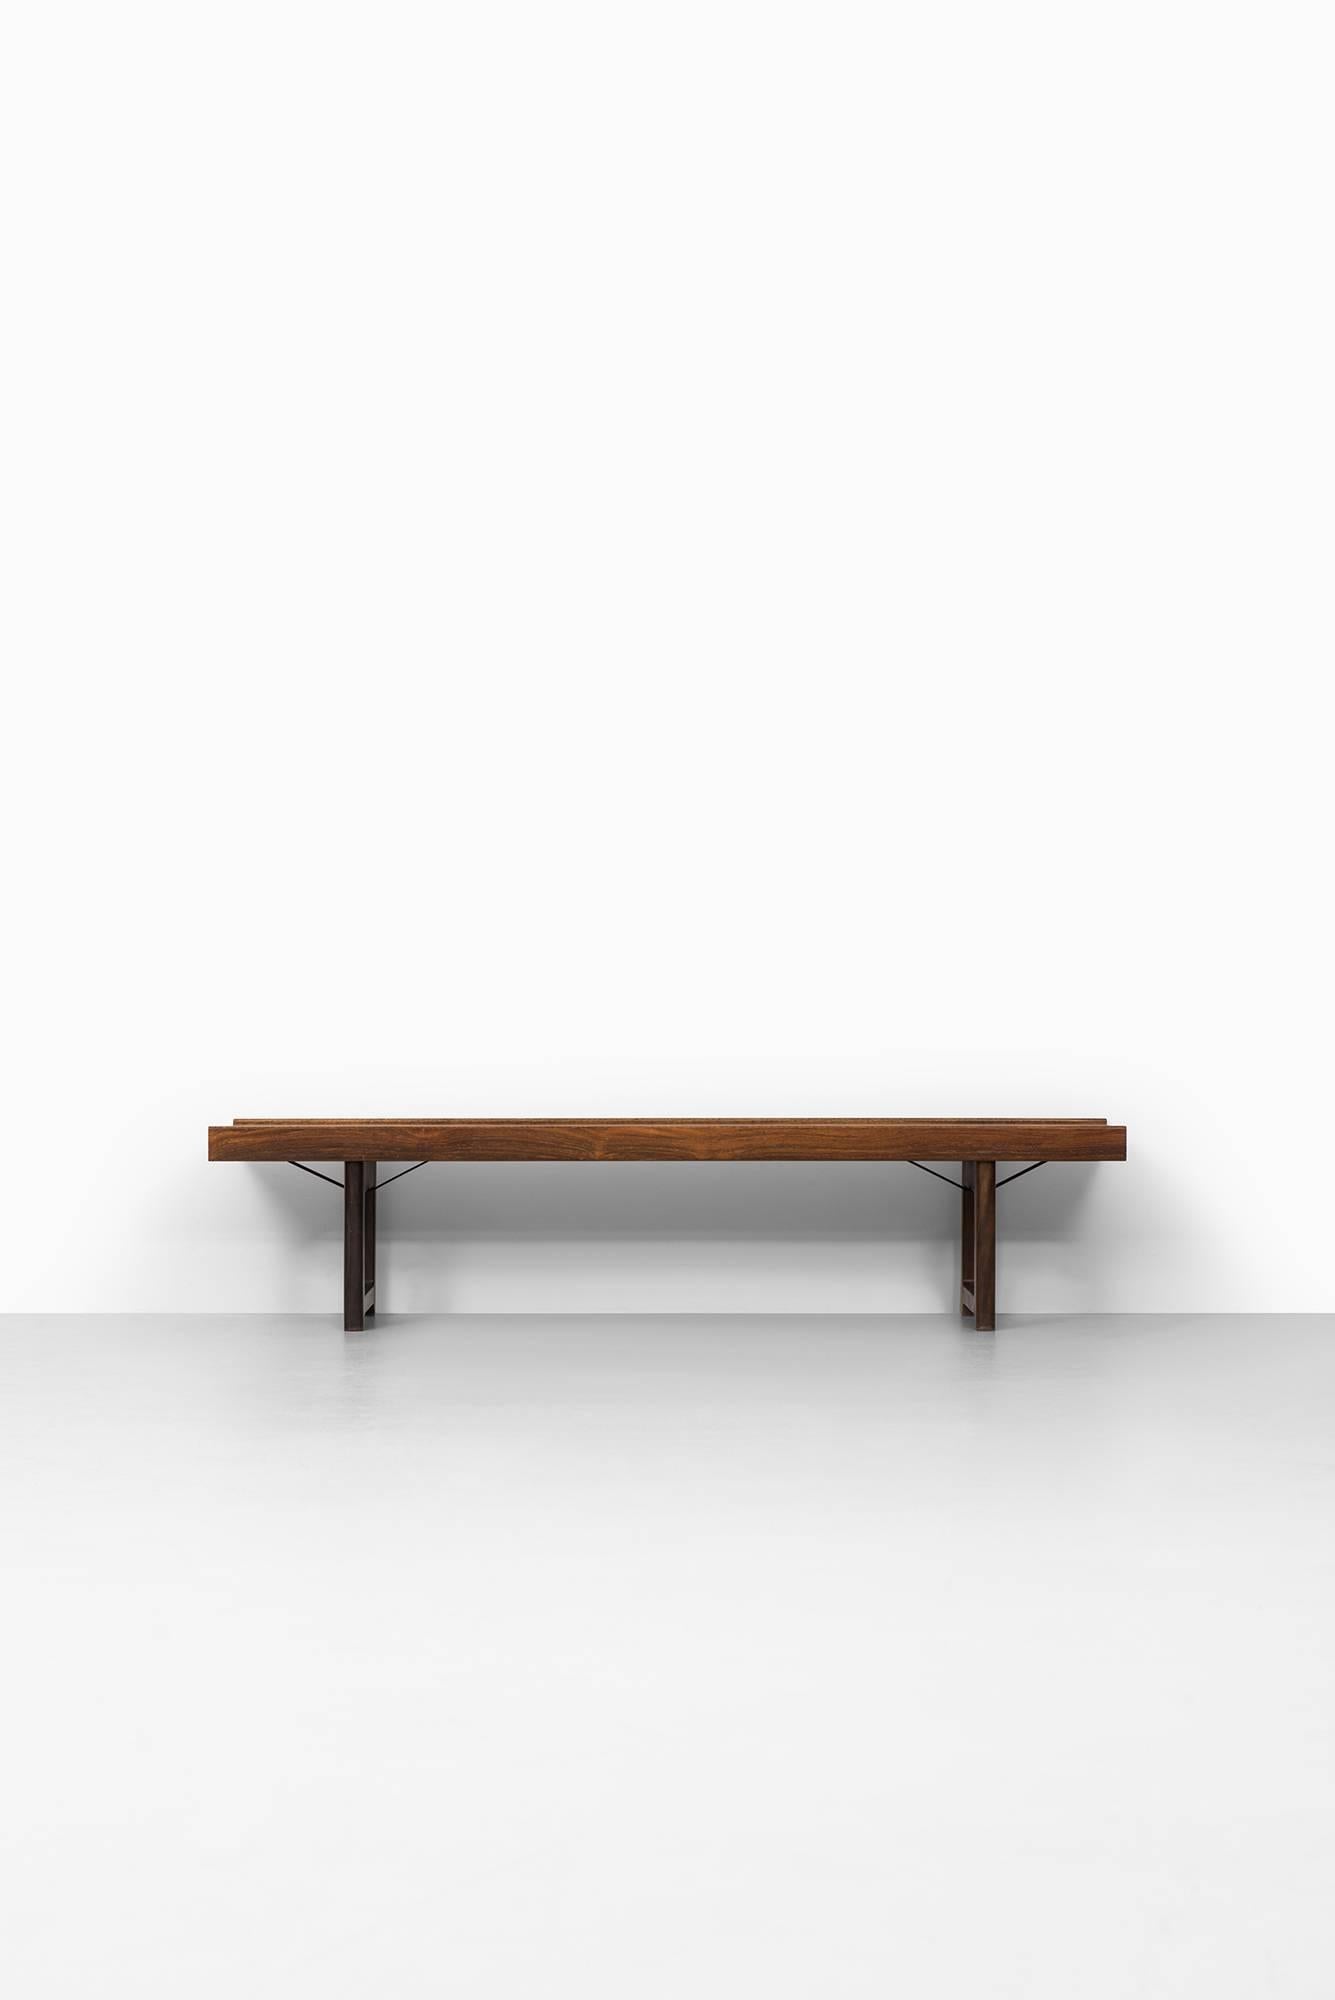 Bench or side table model Krobo designed by Torbjørn Afdal. Produced by Bruksbo in Norway.